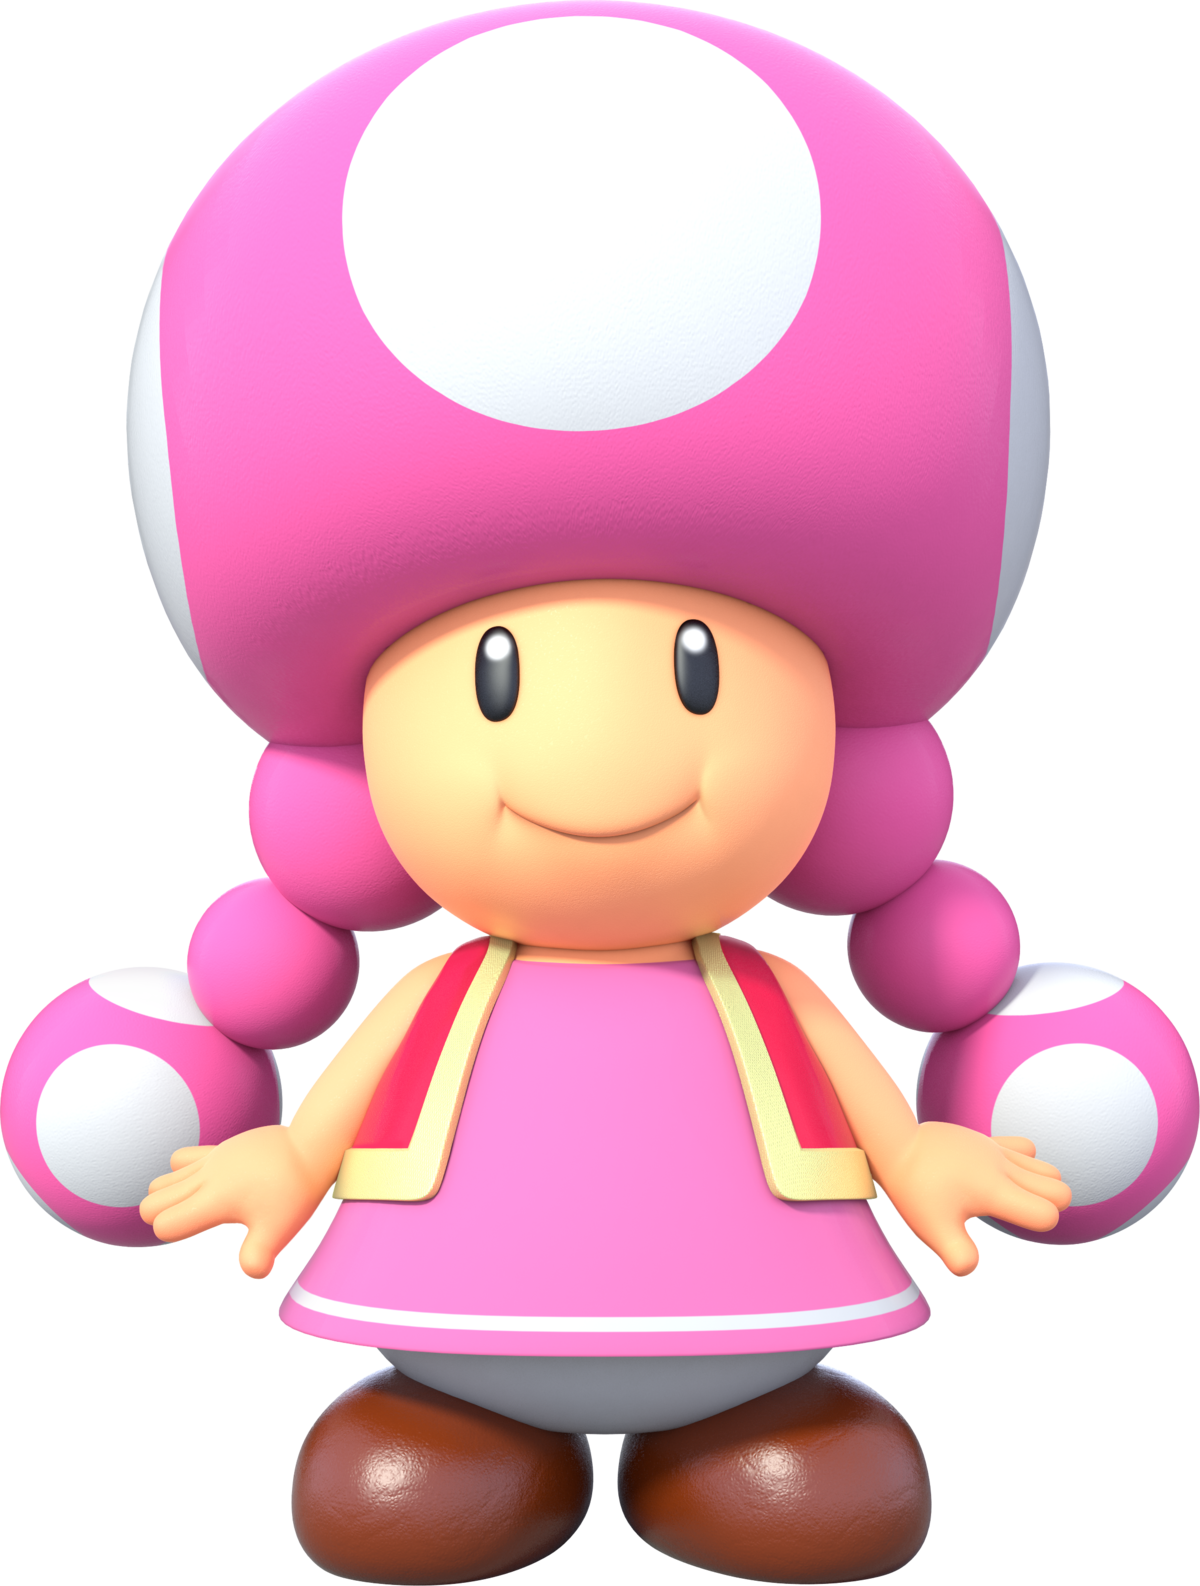 Female Mario Characters